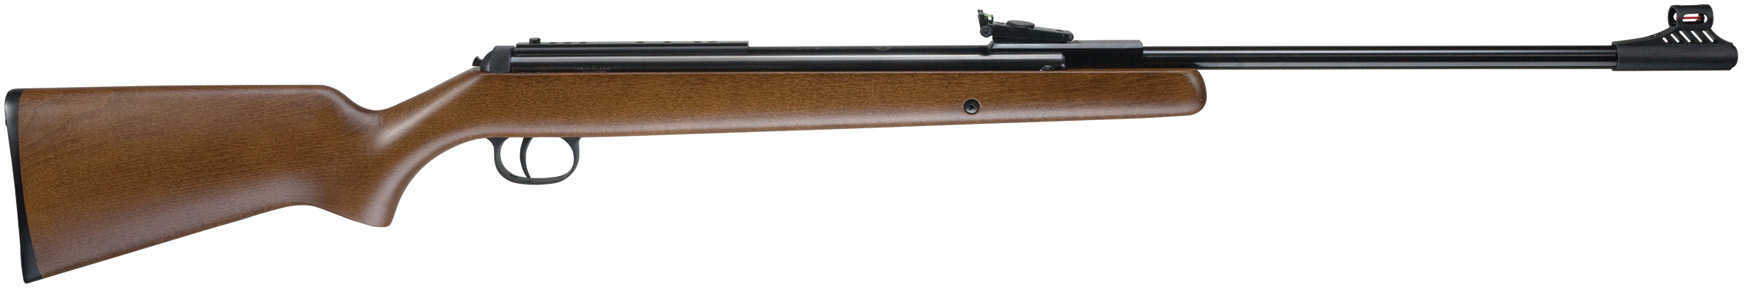 RWS Model 34 .22 Caliber 1 Shot